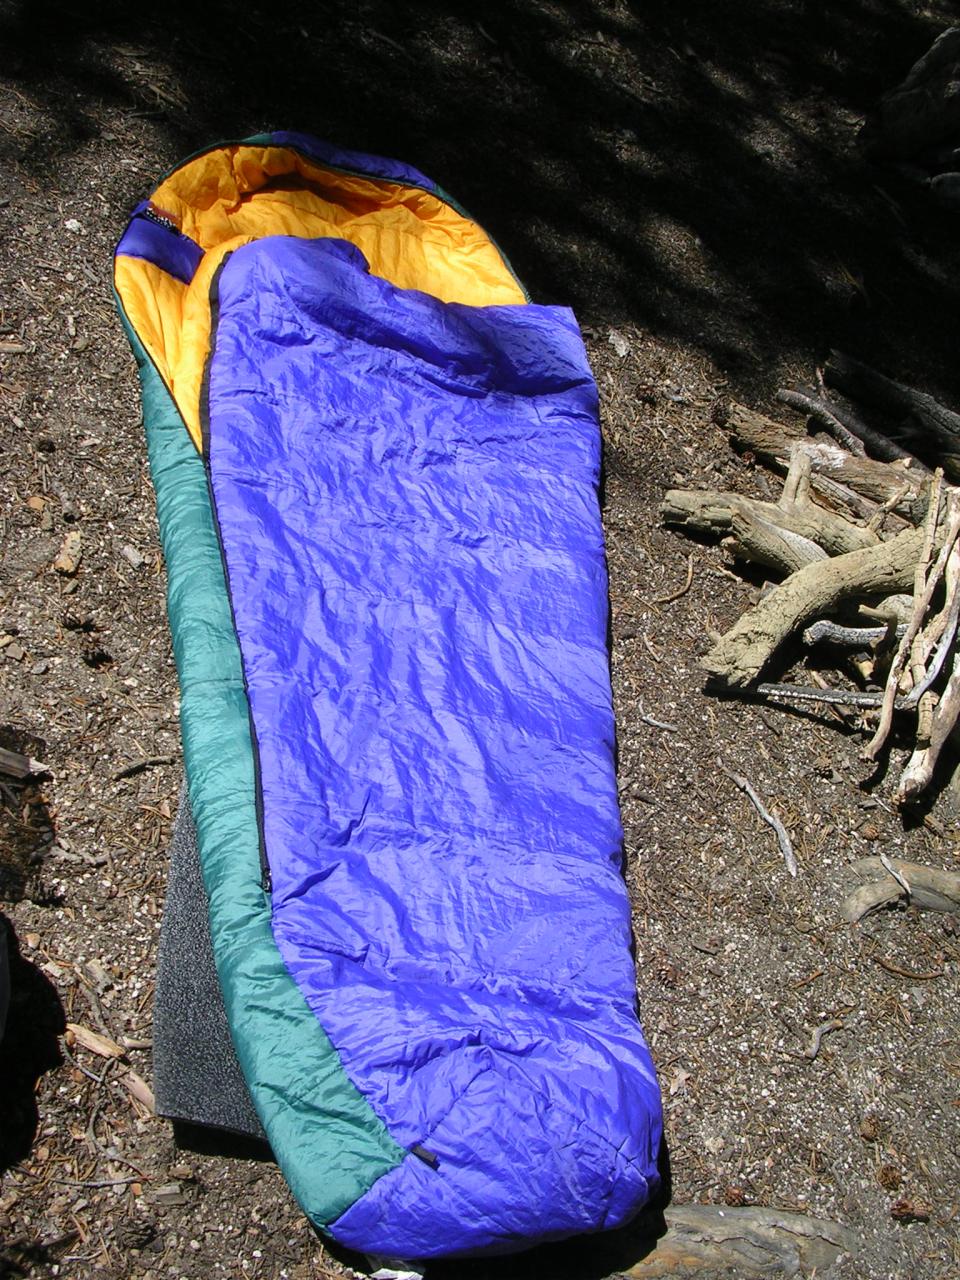 Sleeping Bag - Wikipedia